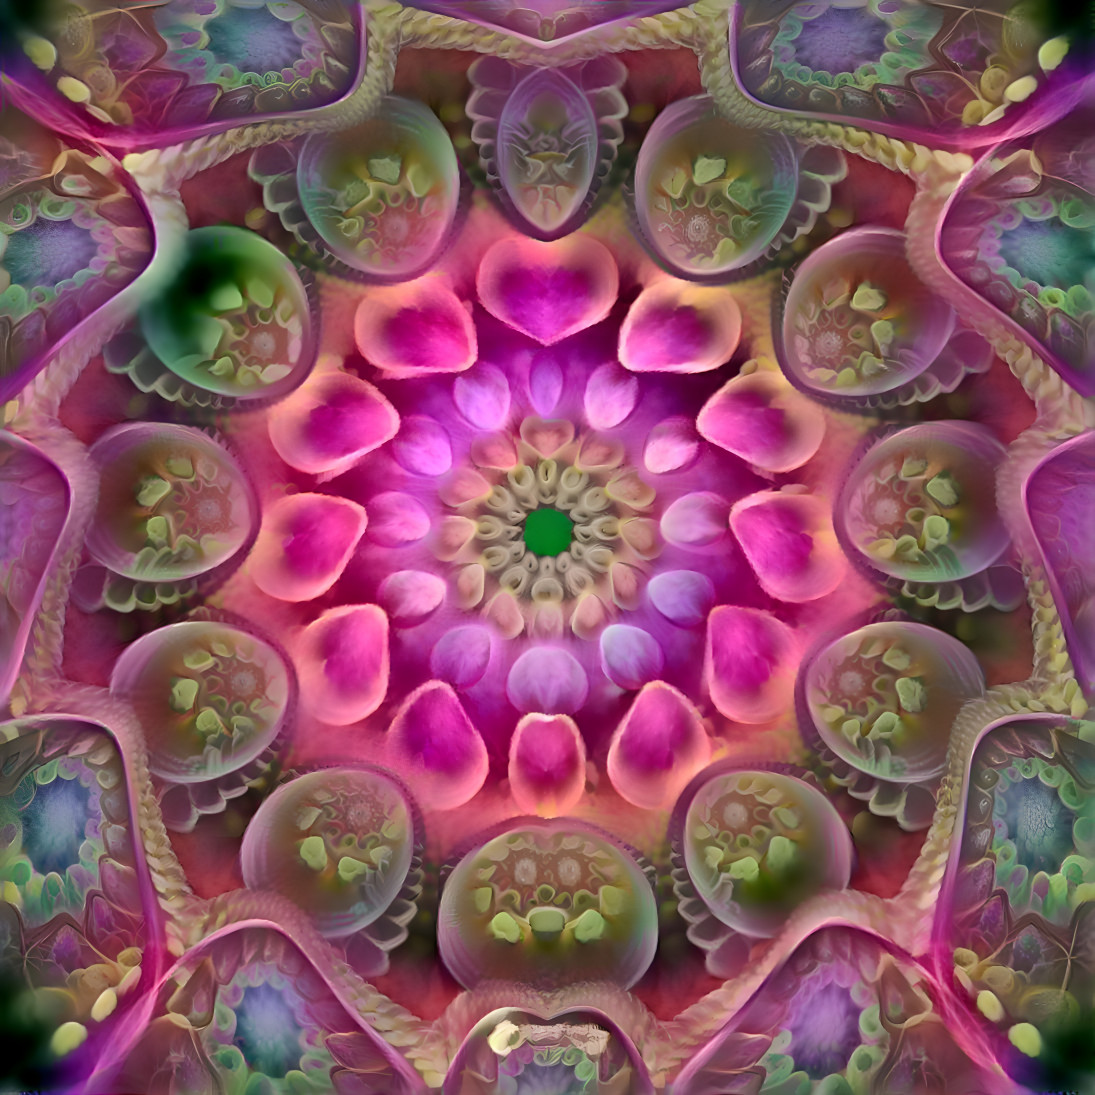 Mandala Flower